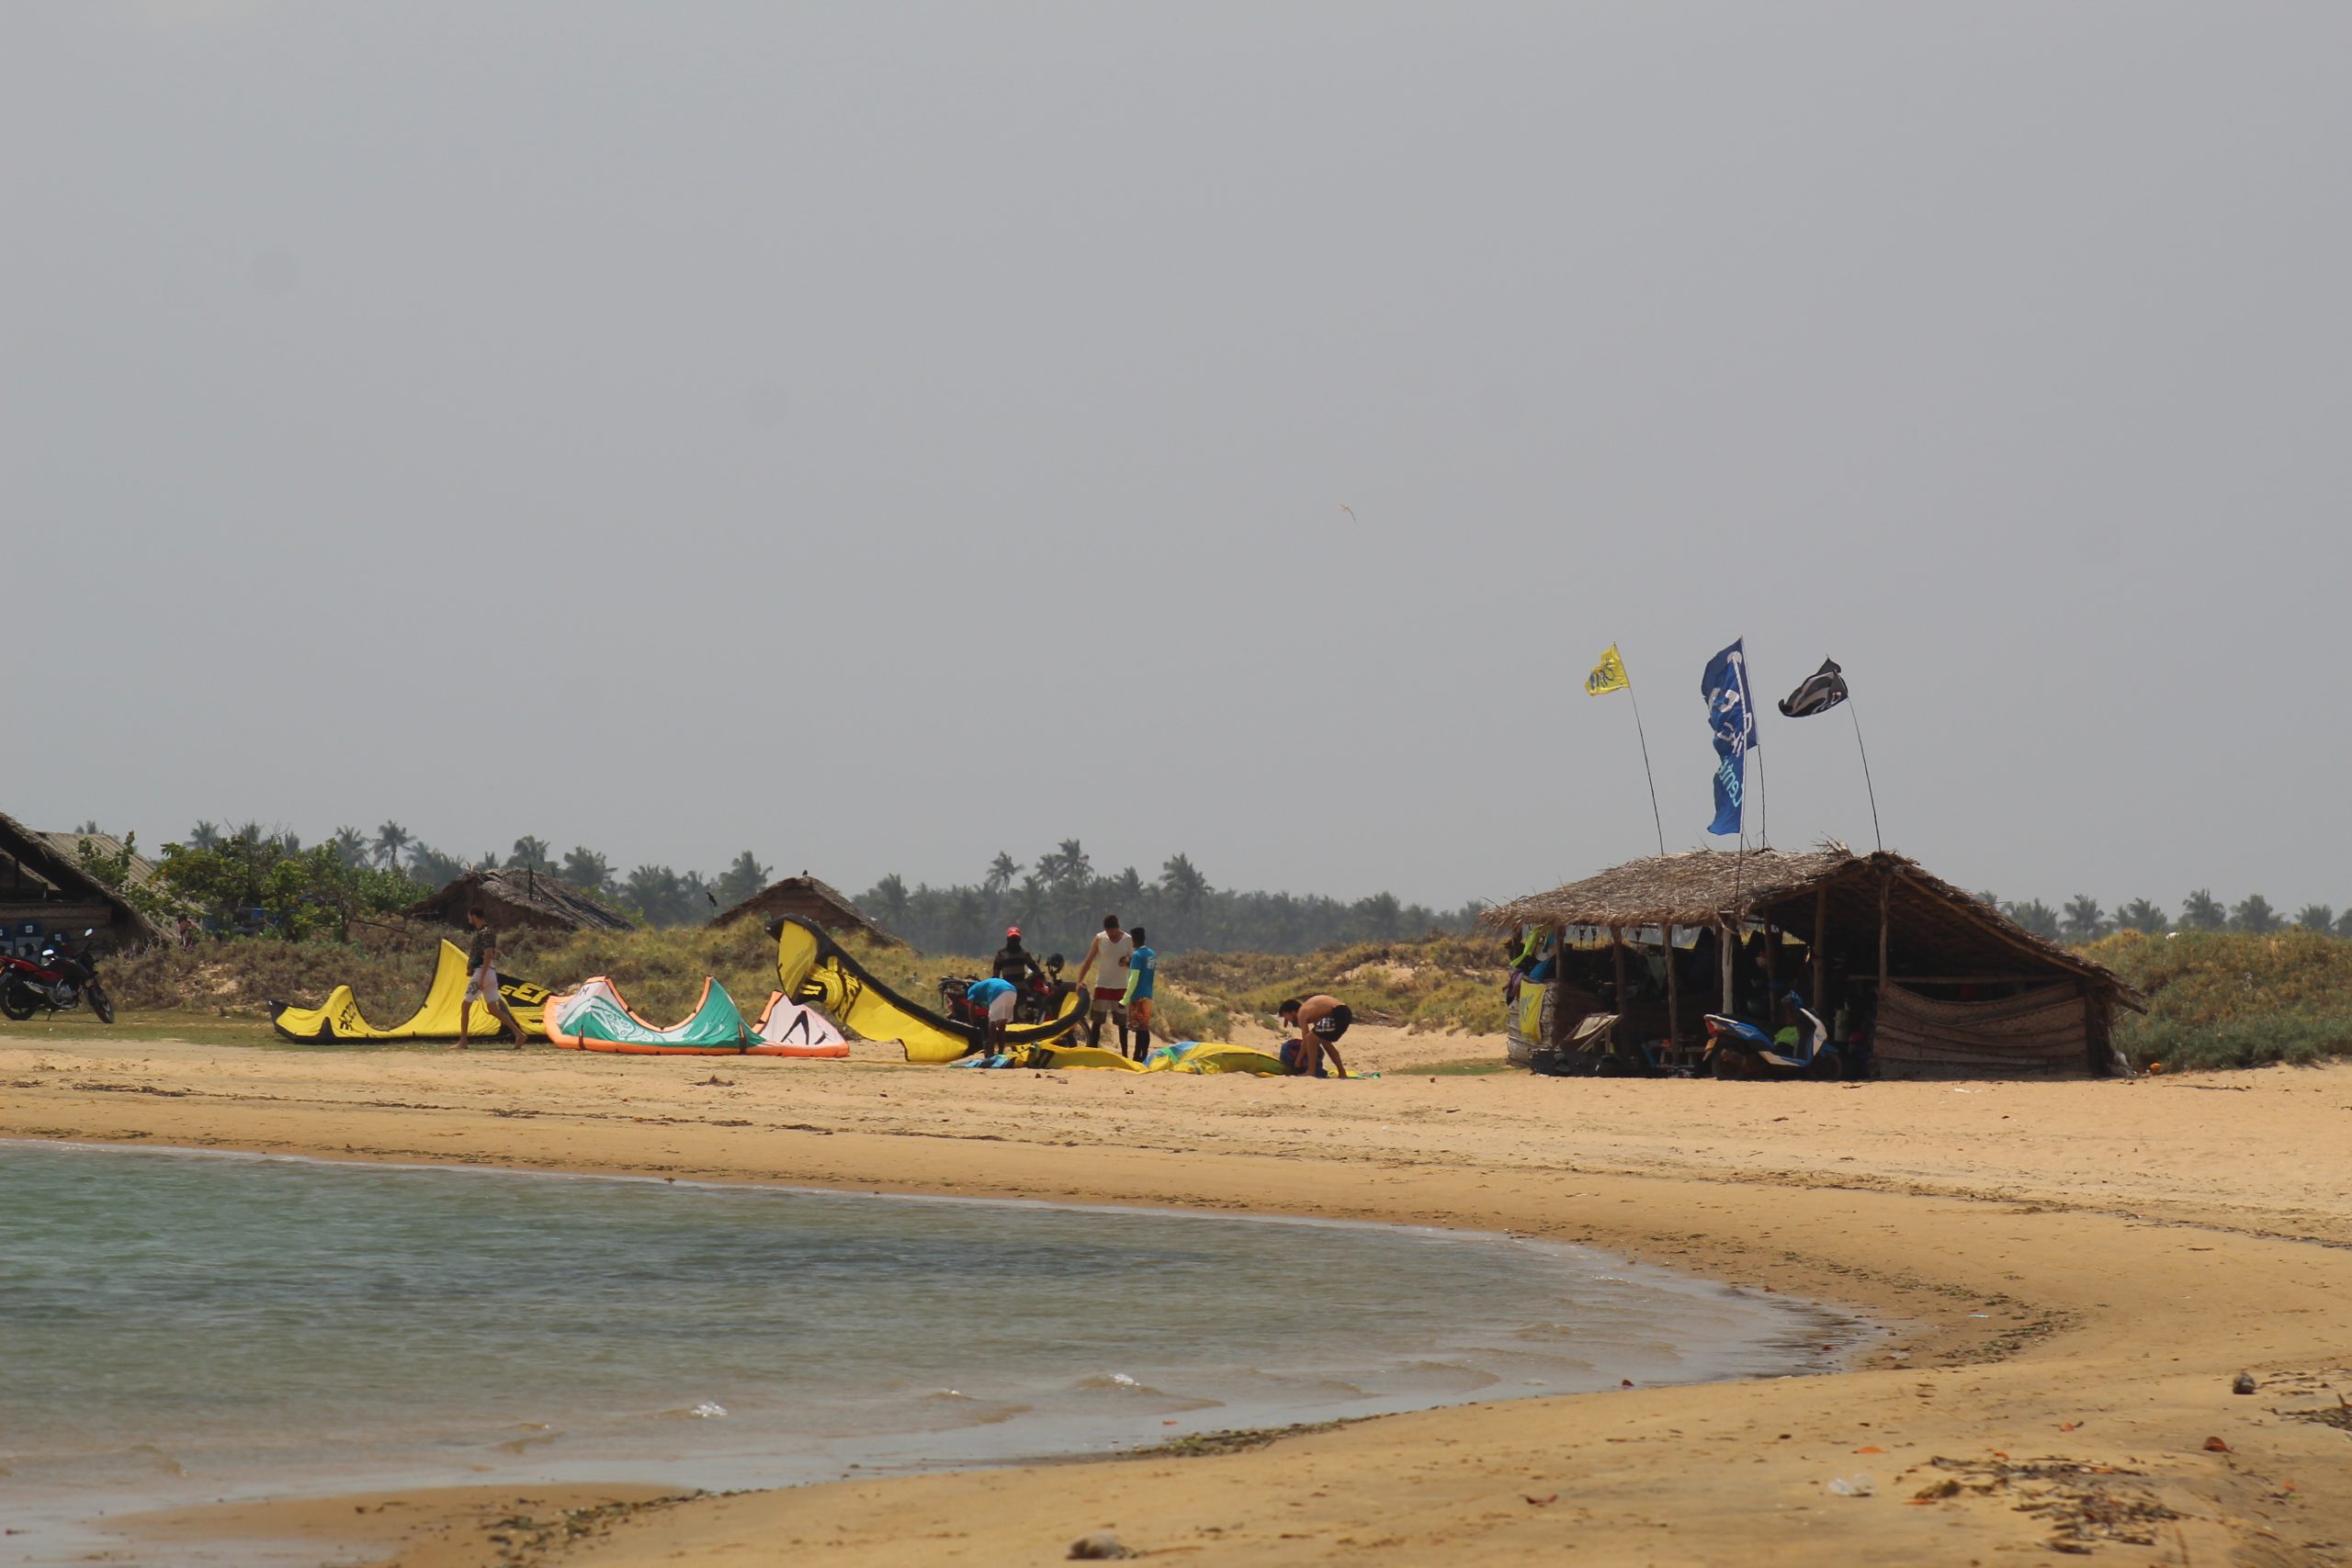 An apic guide to kitesurf in Sri Lanka